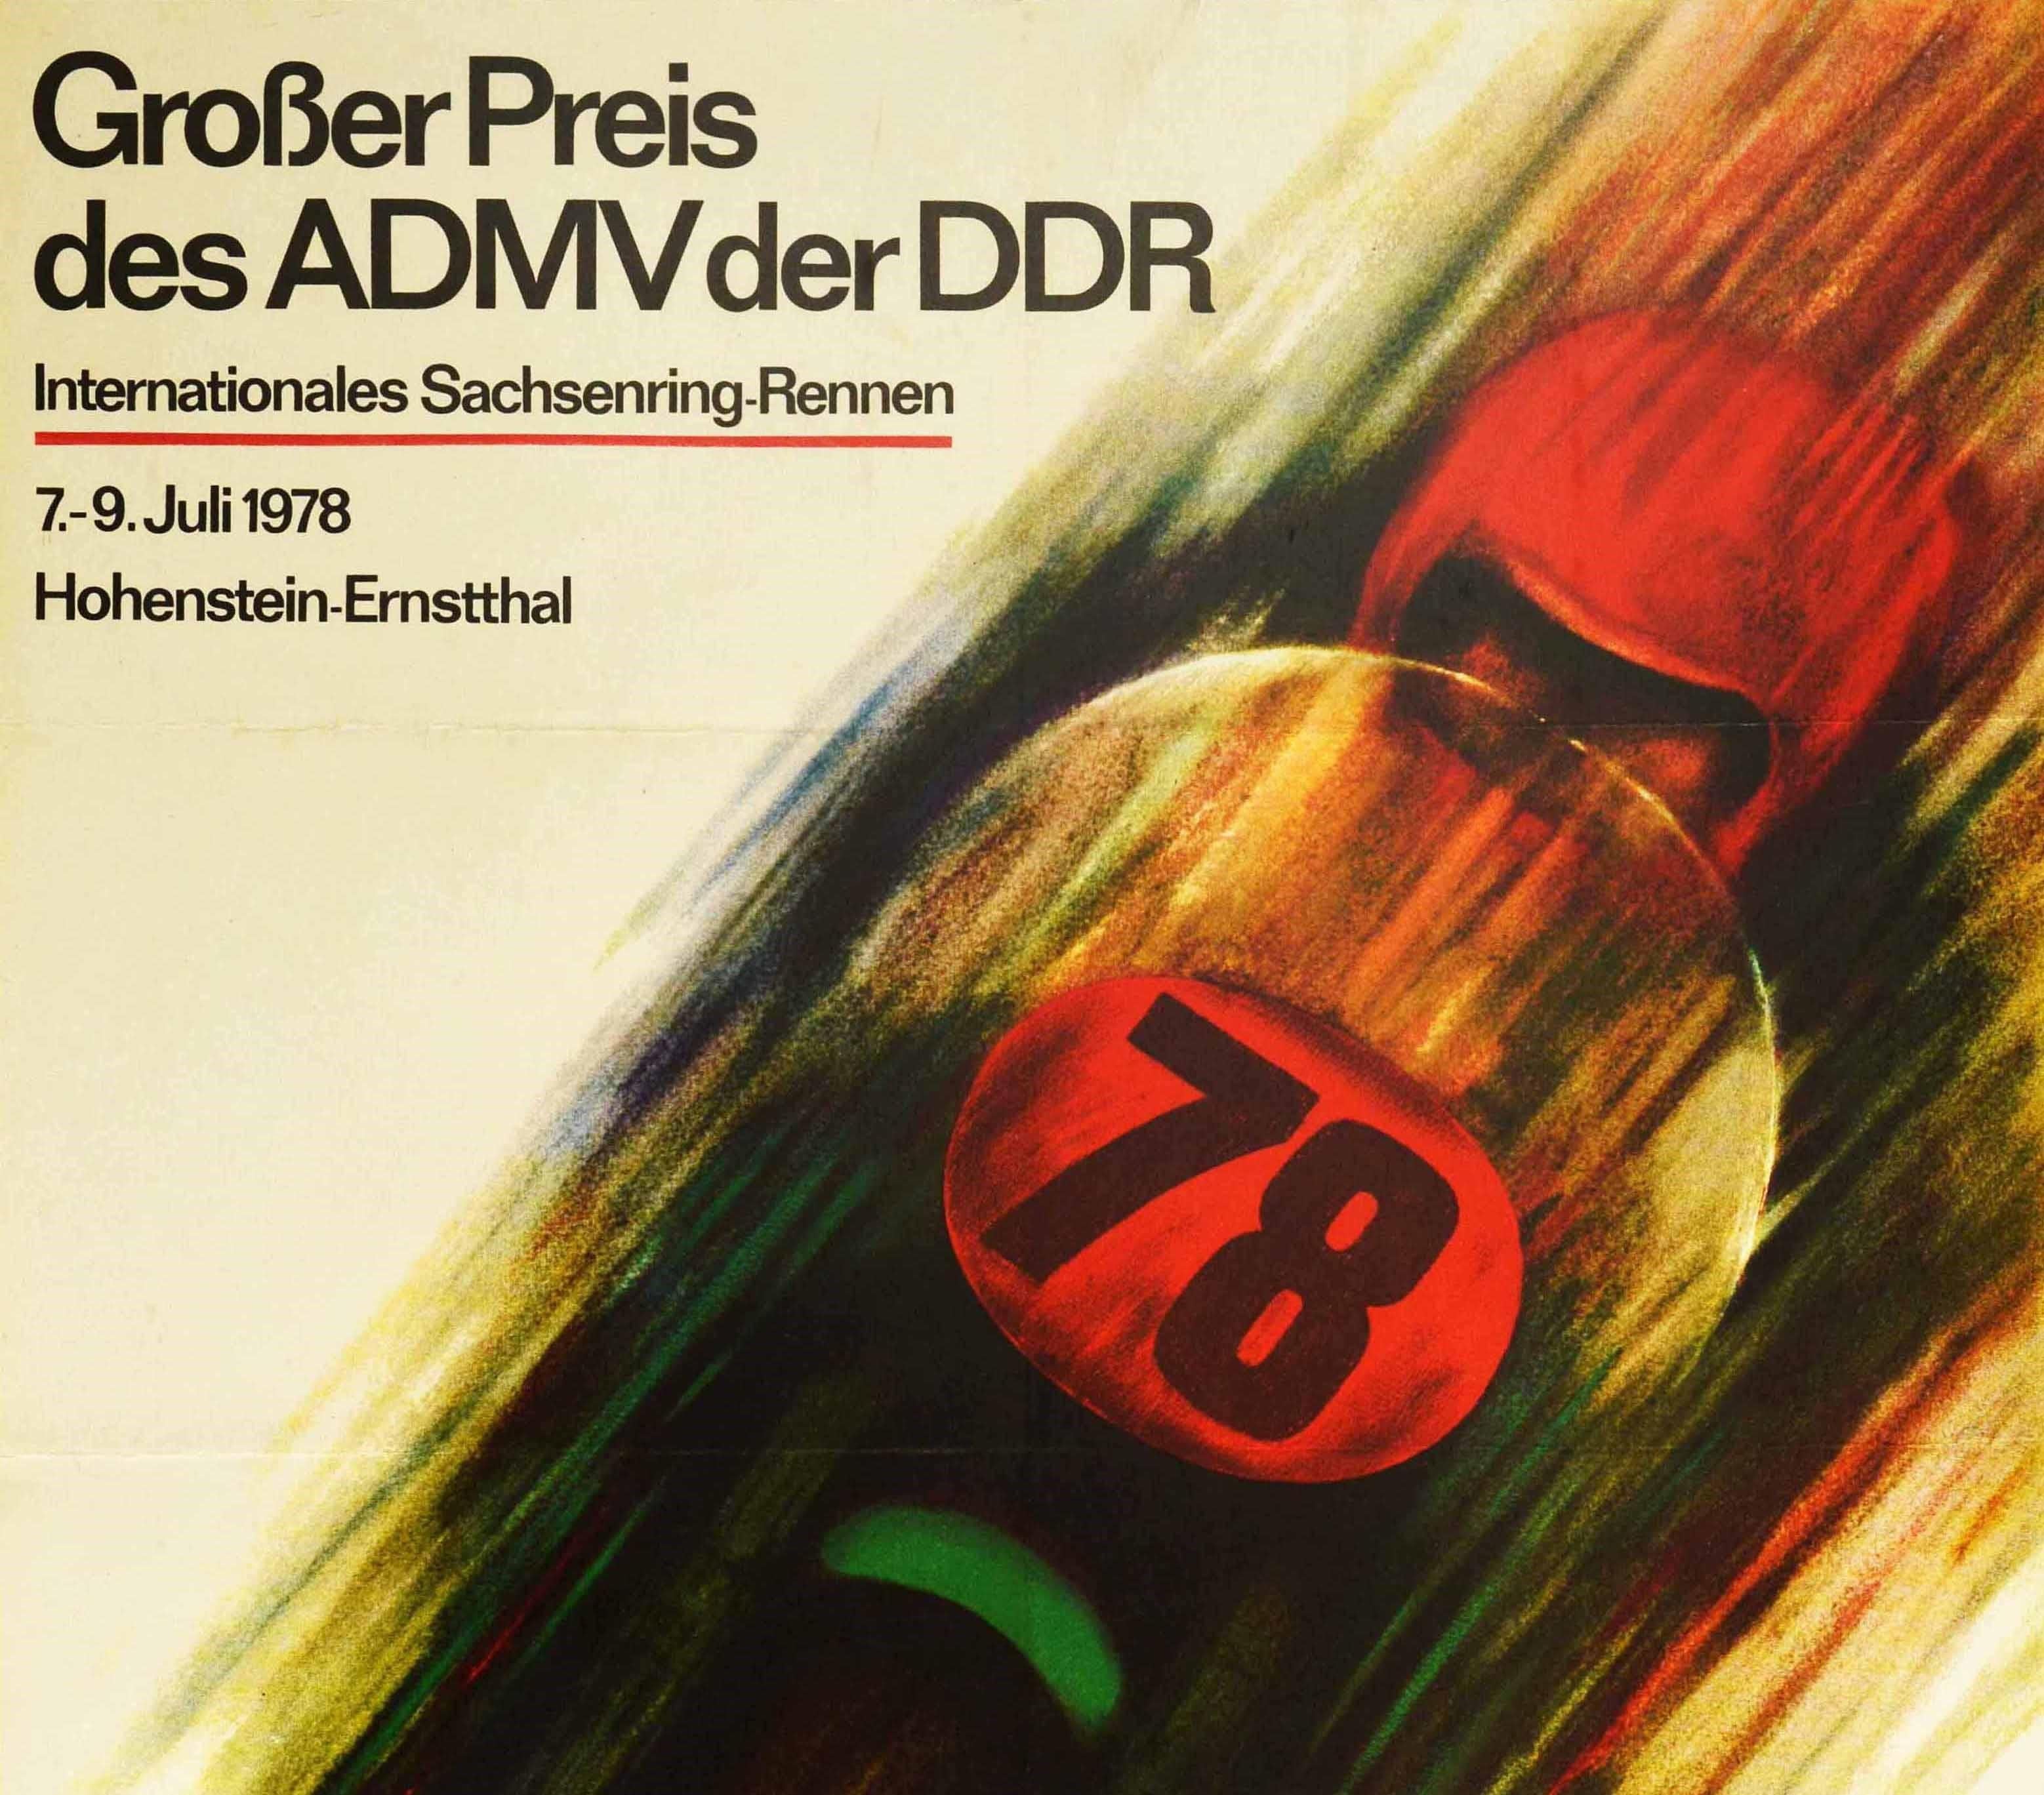 Original Vintage Sport Poster Grand Prix Motorcycle Race Sachsenring ADMV DDR - Print by Netzker